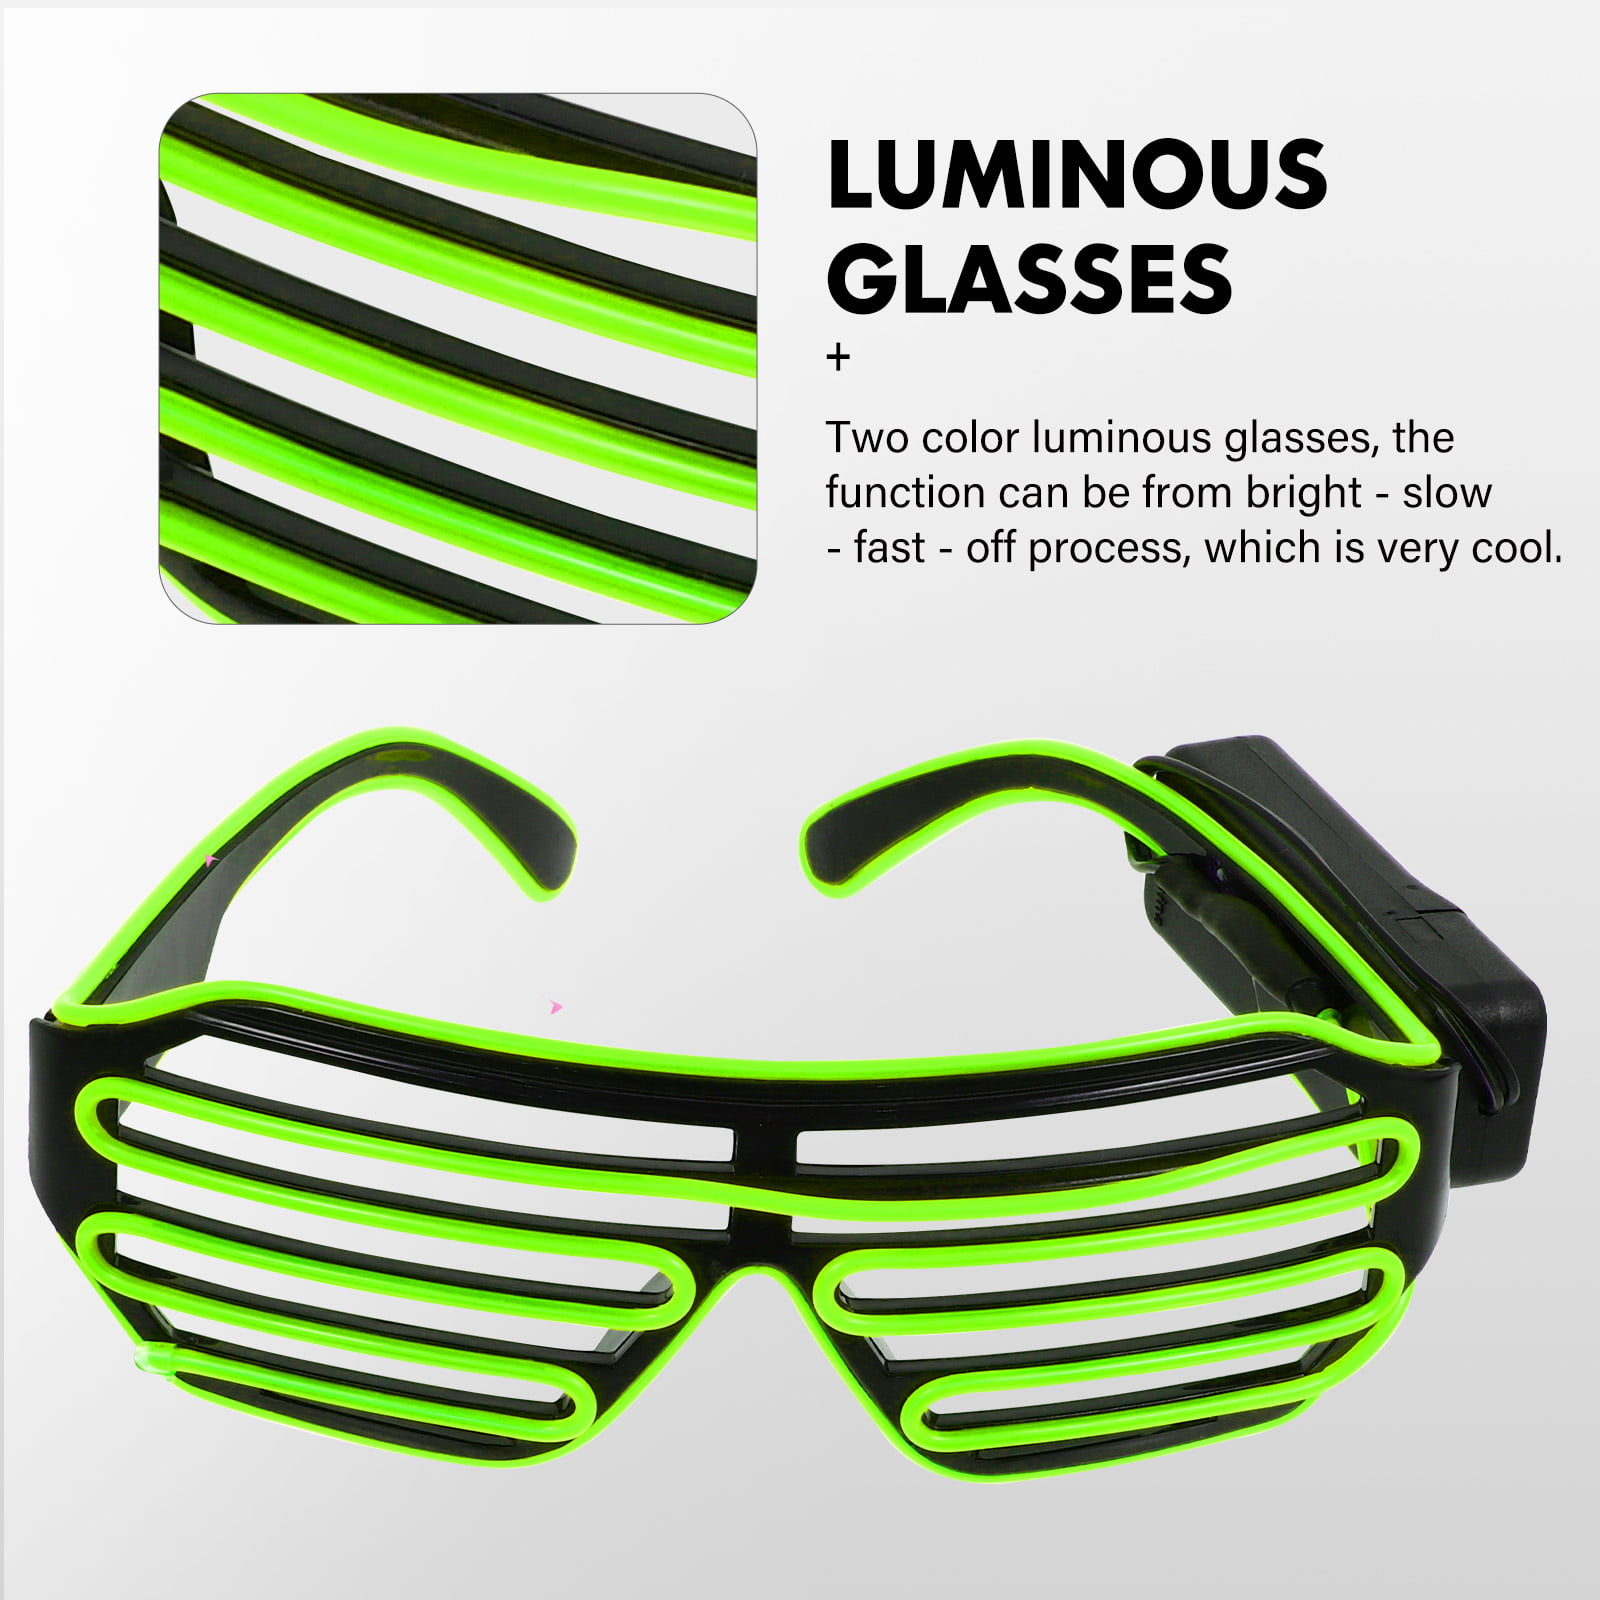 20 Pairs Neon Colors Sunglasses Party Favor Goody Bag Favors Supplies Unisex for Graduation Mardi Gras Holidays 